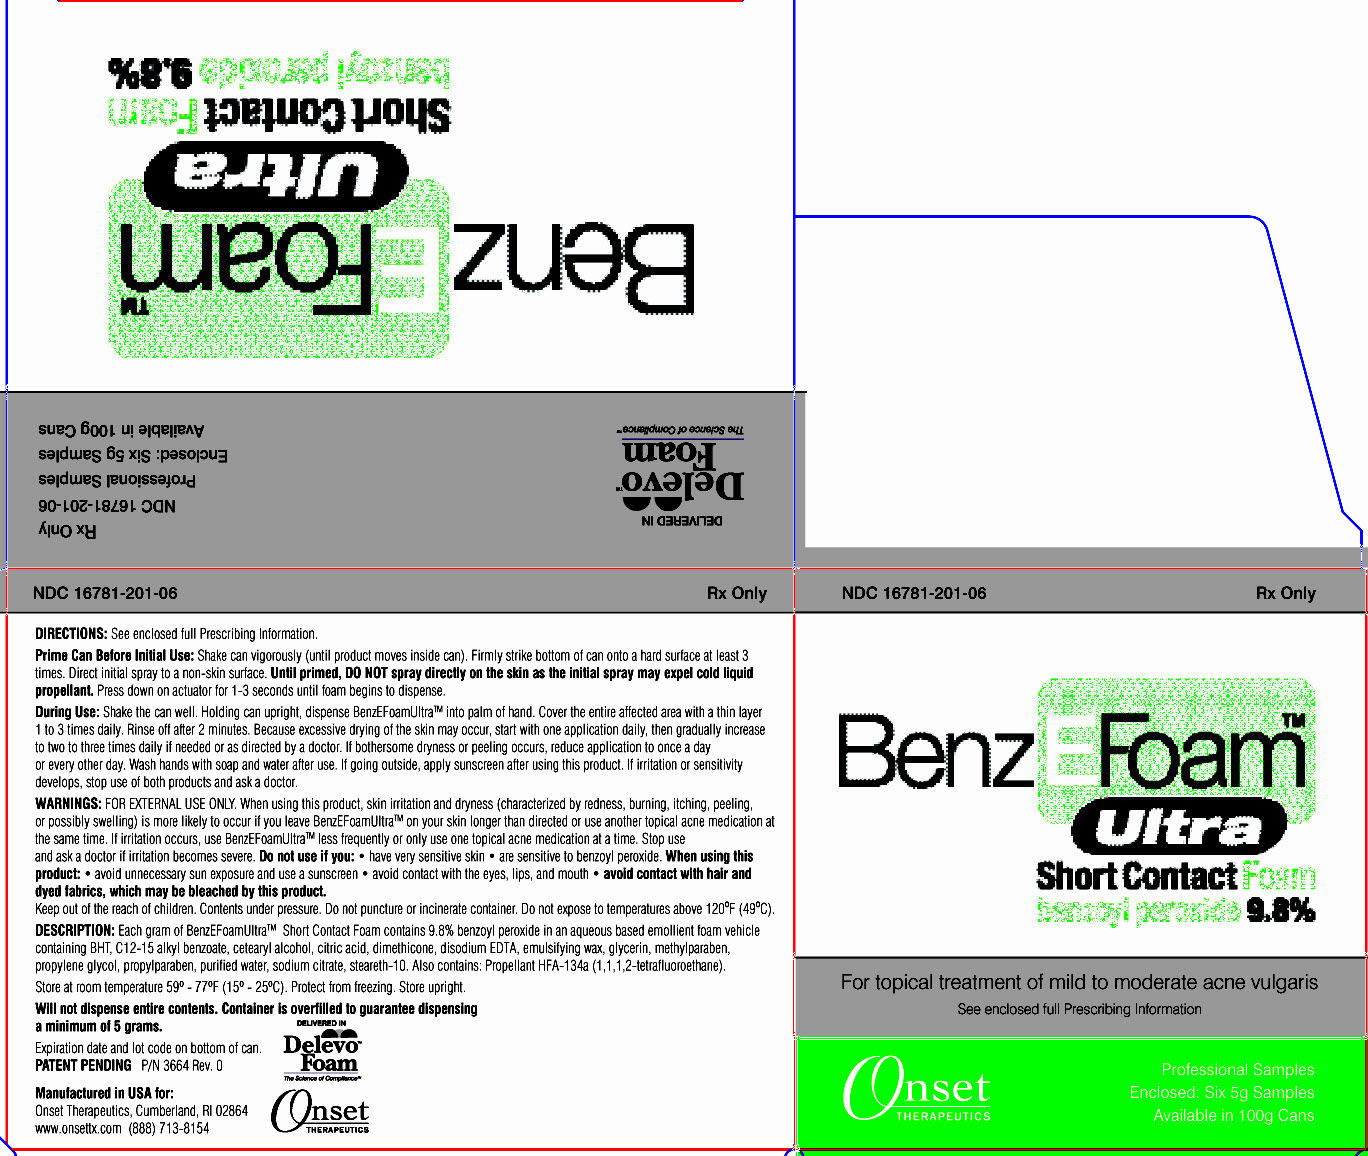 BenzEFoamUltra 5 Grams Carton Label